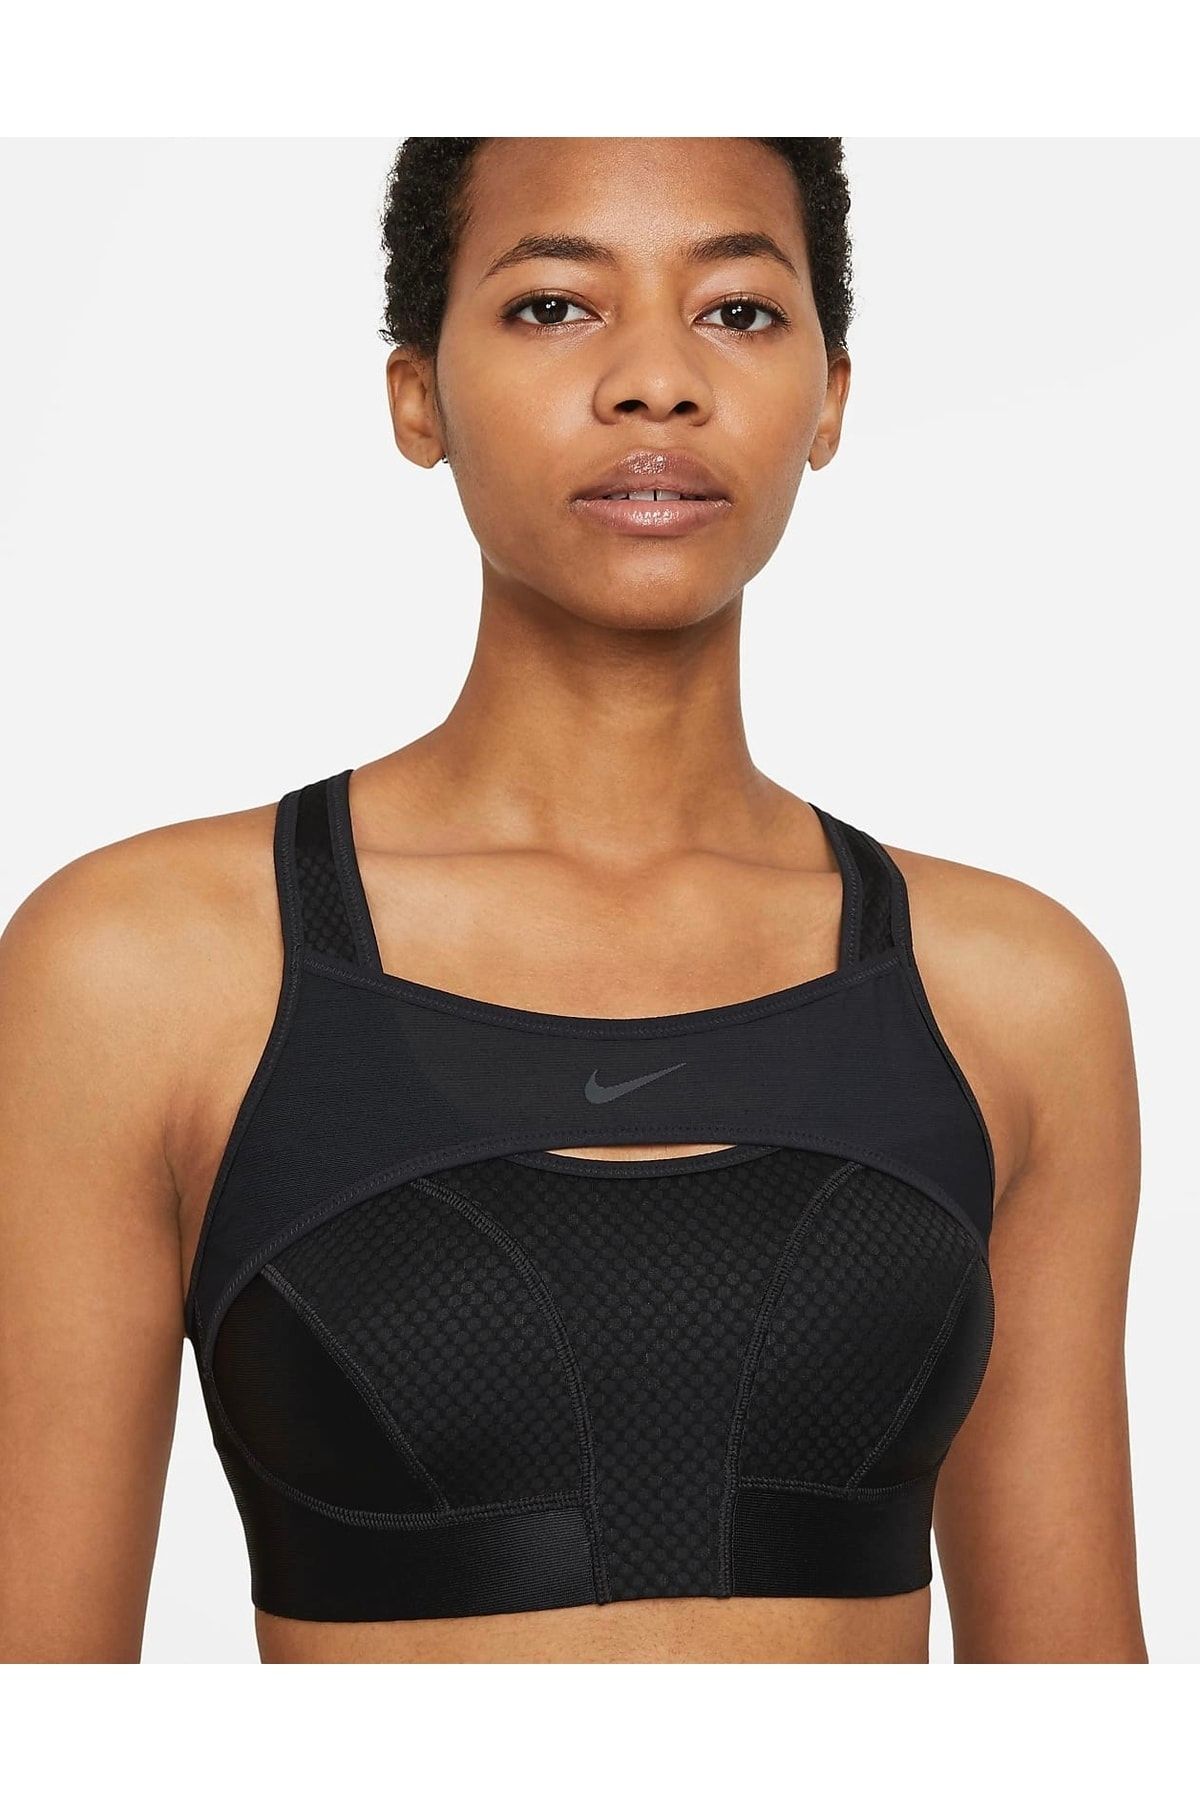 Nike Alpha Ultrabreathe Bra Women's Black Training Sports Bra